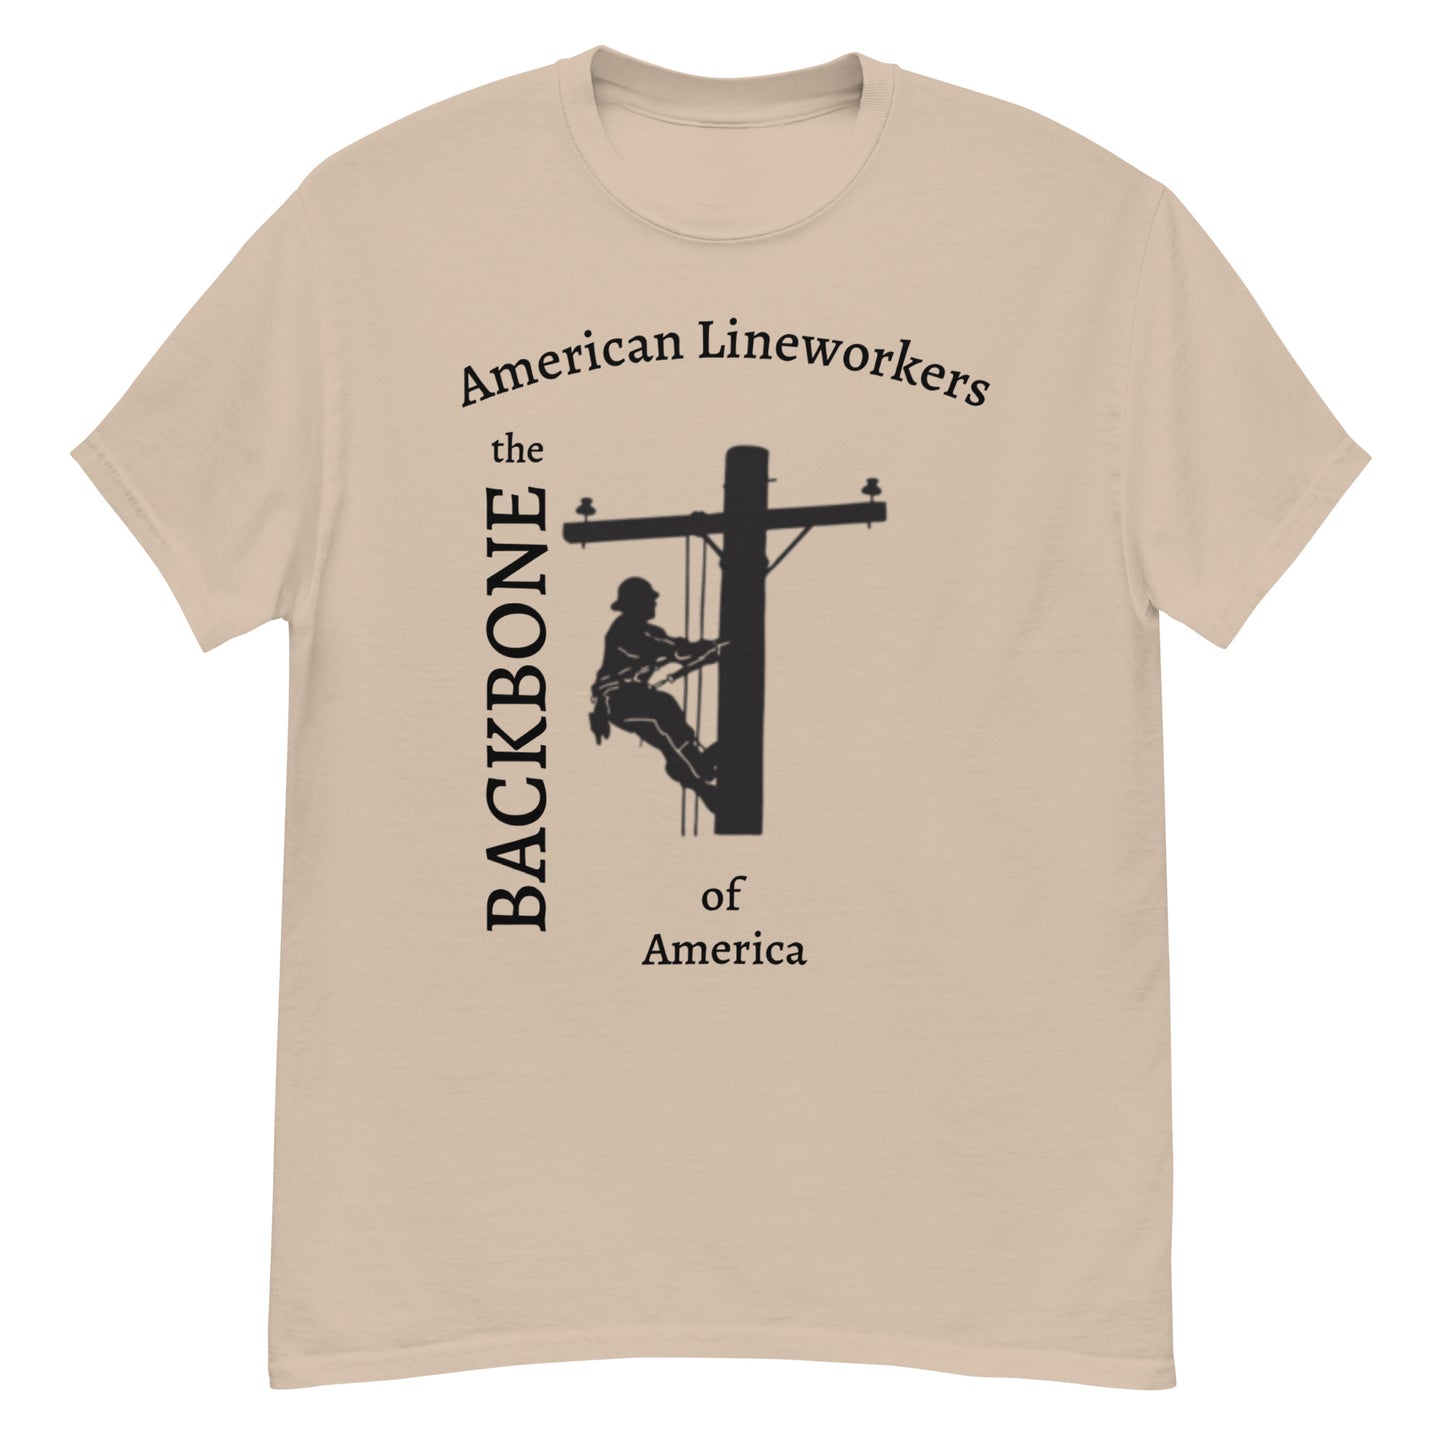 American Lineworkers - Backbone of America classic tee